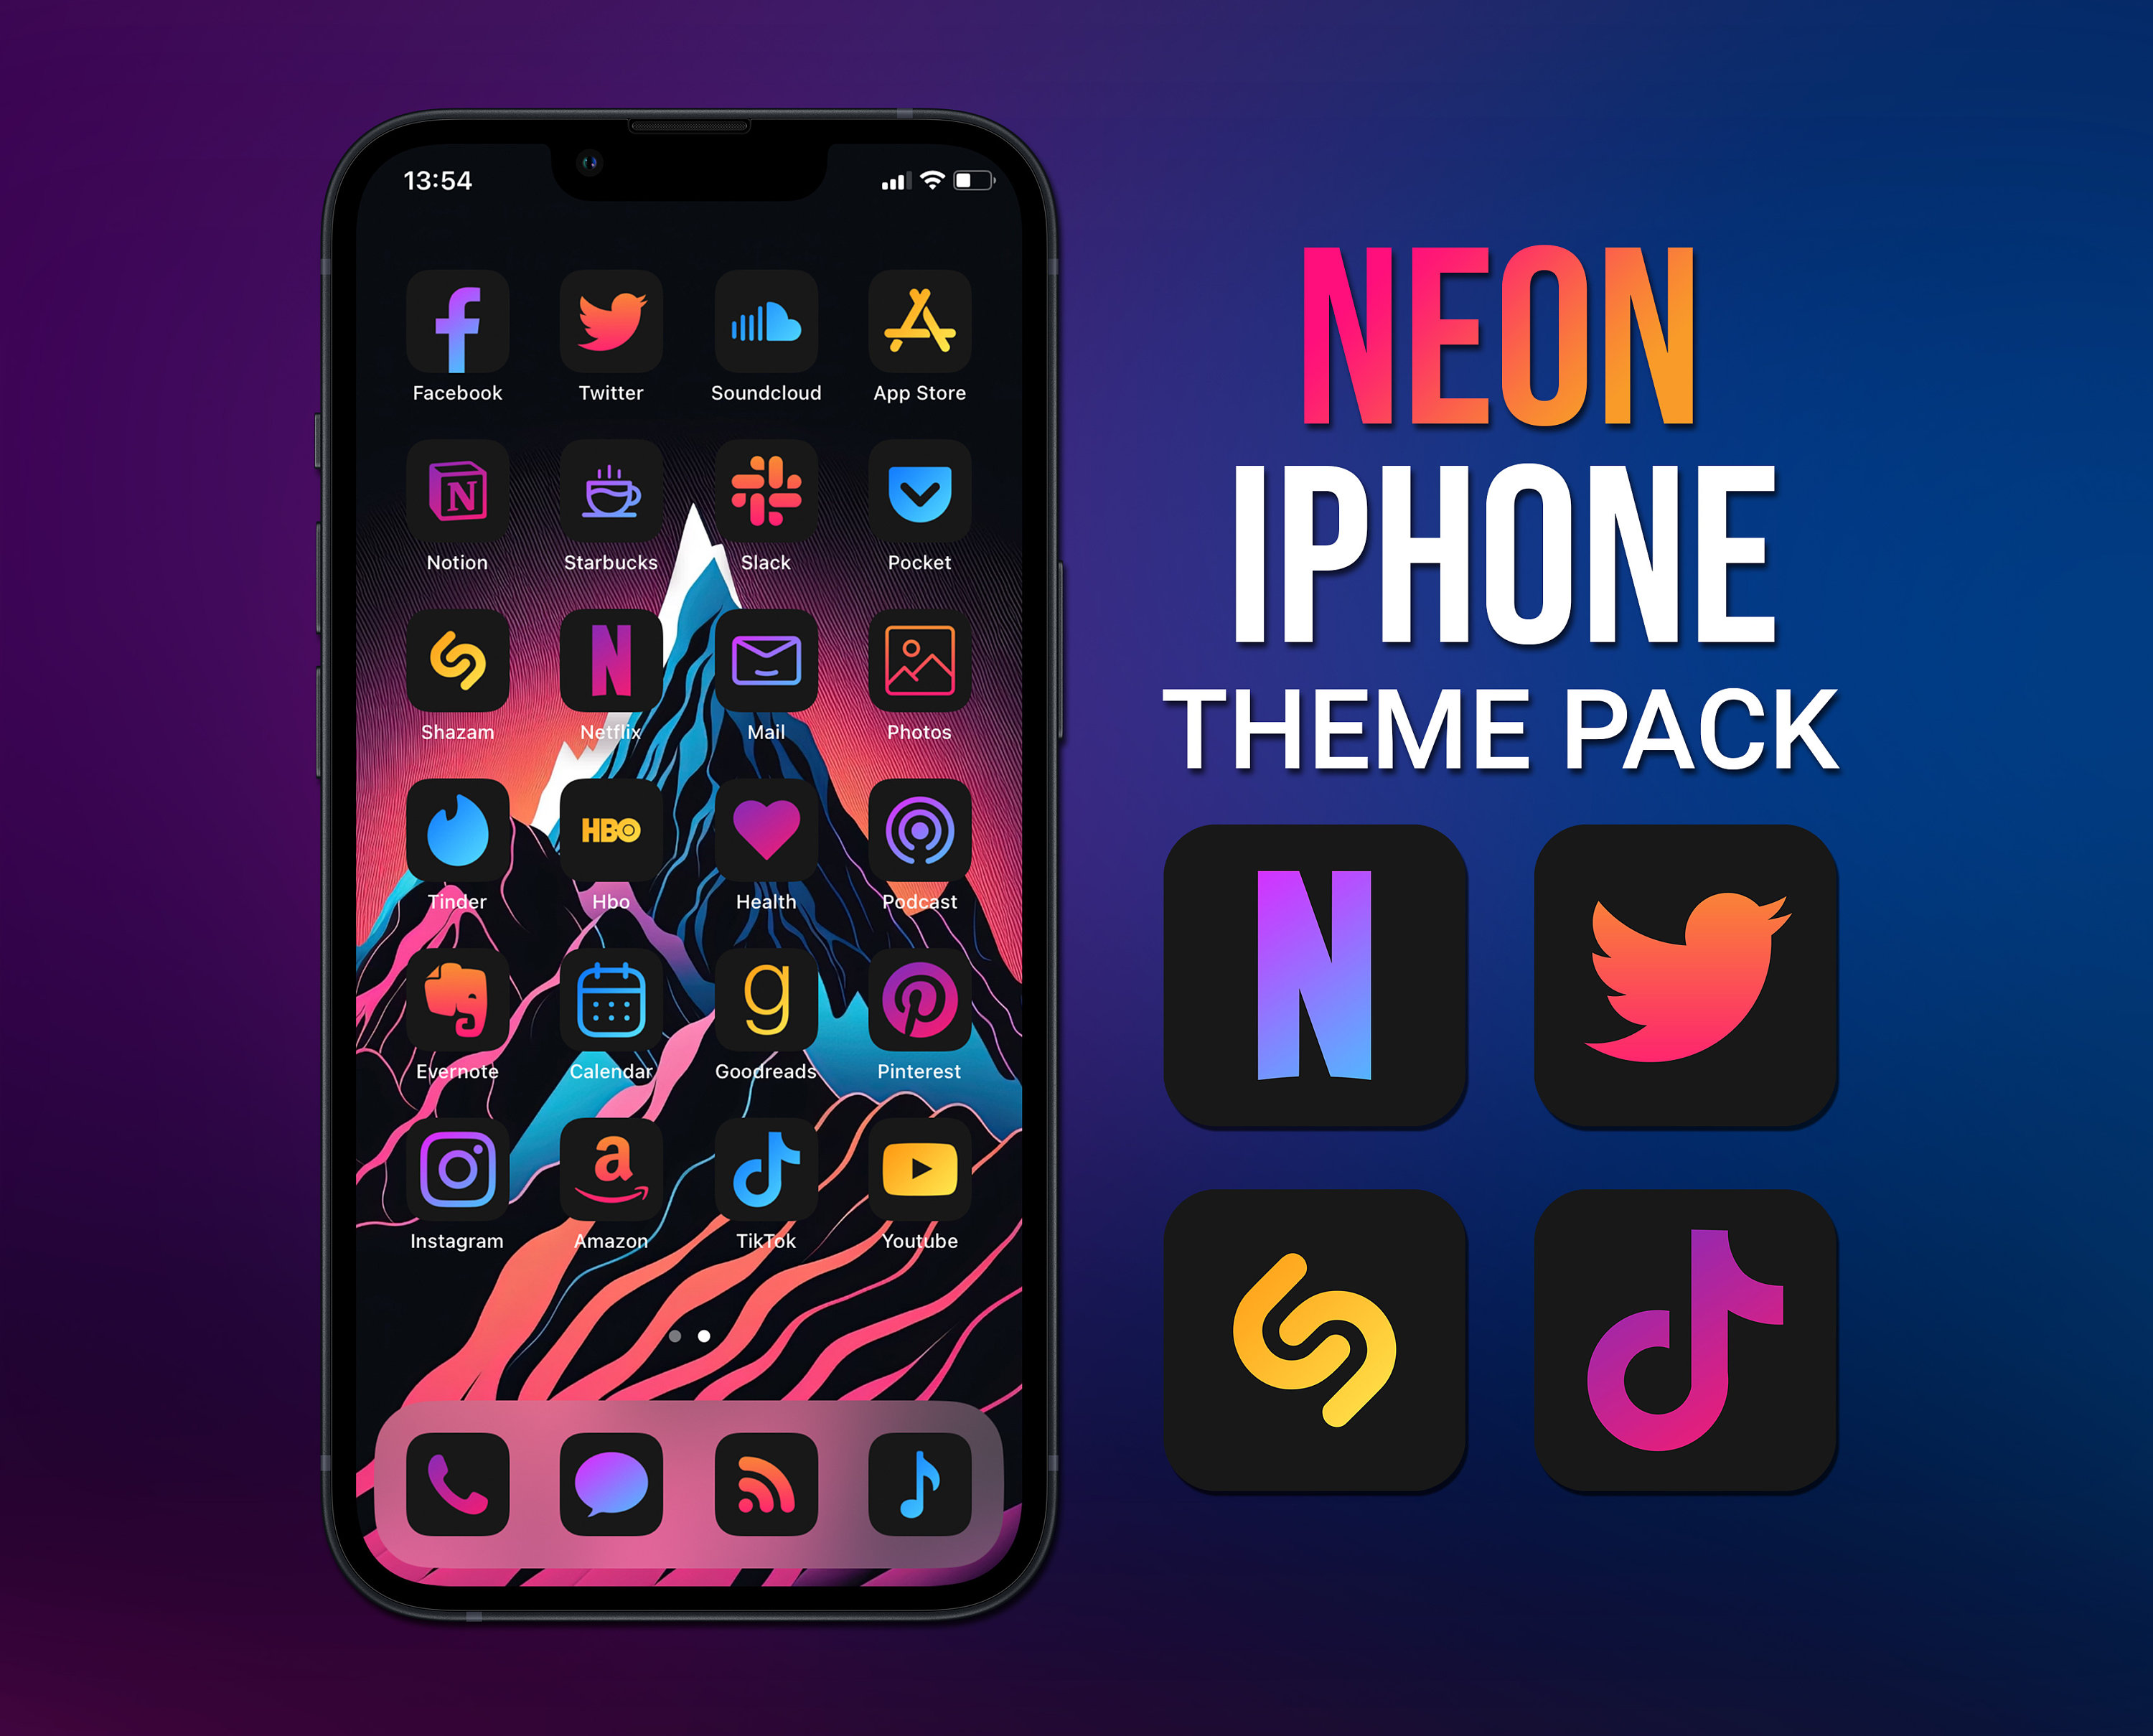 Supreme Drip Neon Sign – Neon Icons